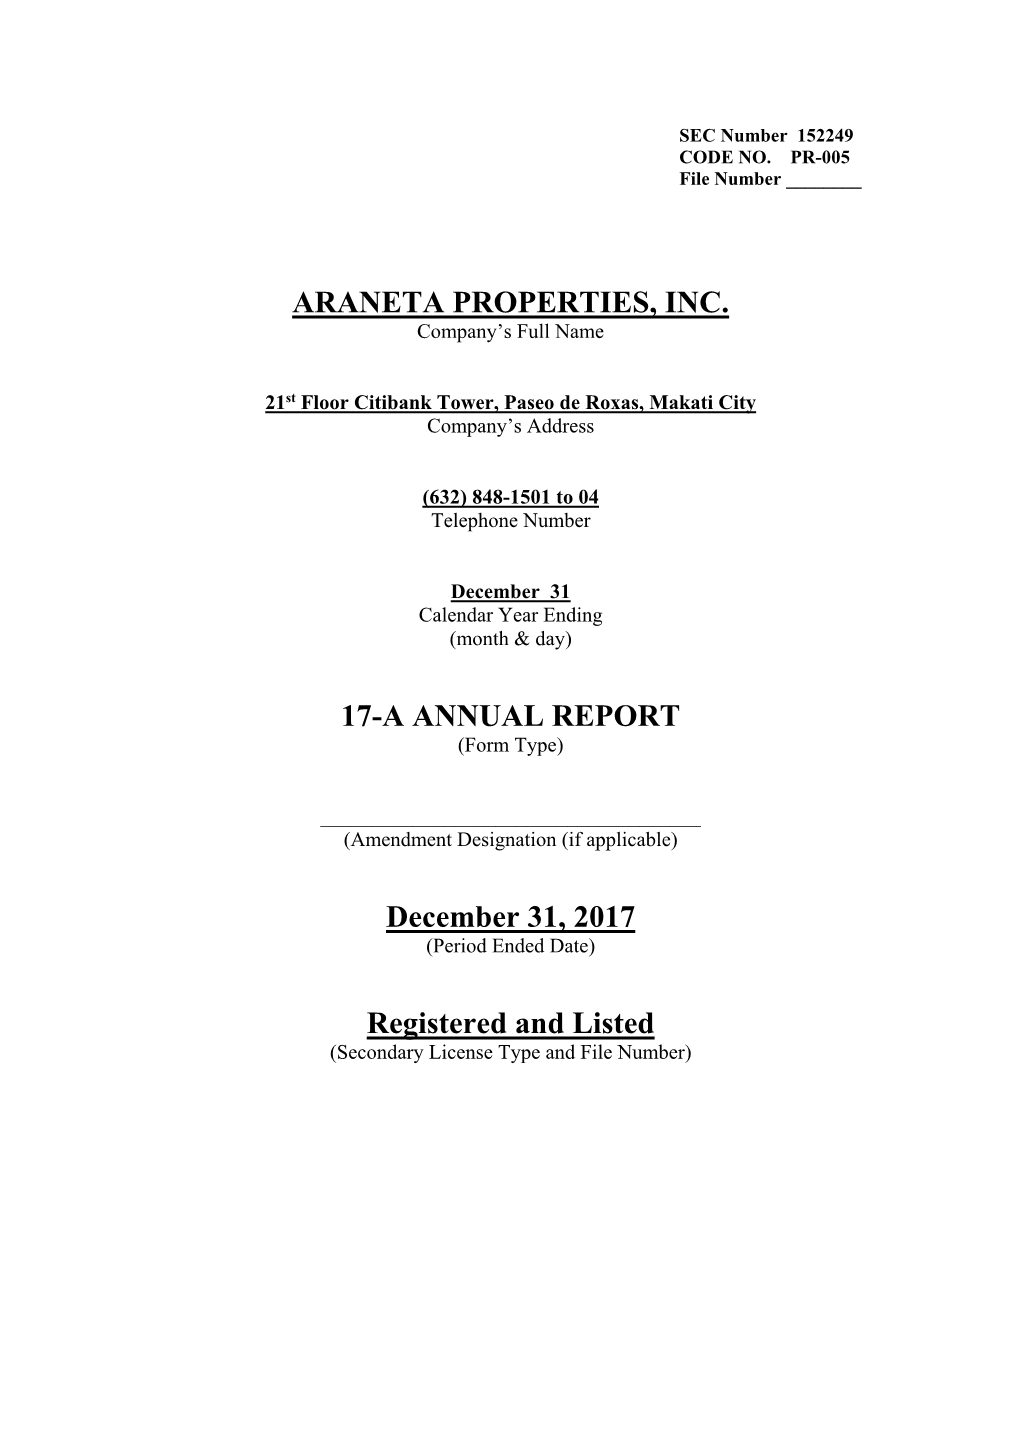 ARANETA PROPERTIES, INC. 17-A ANNUAL REPORT December 31